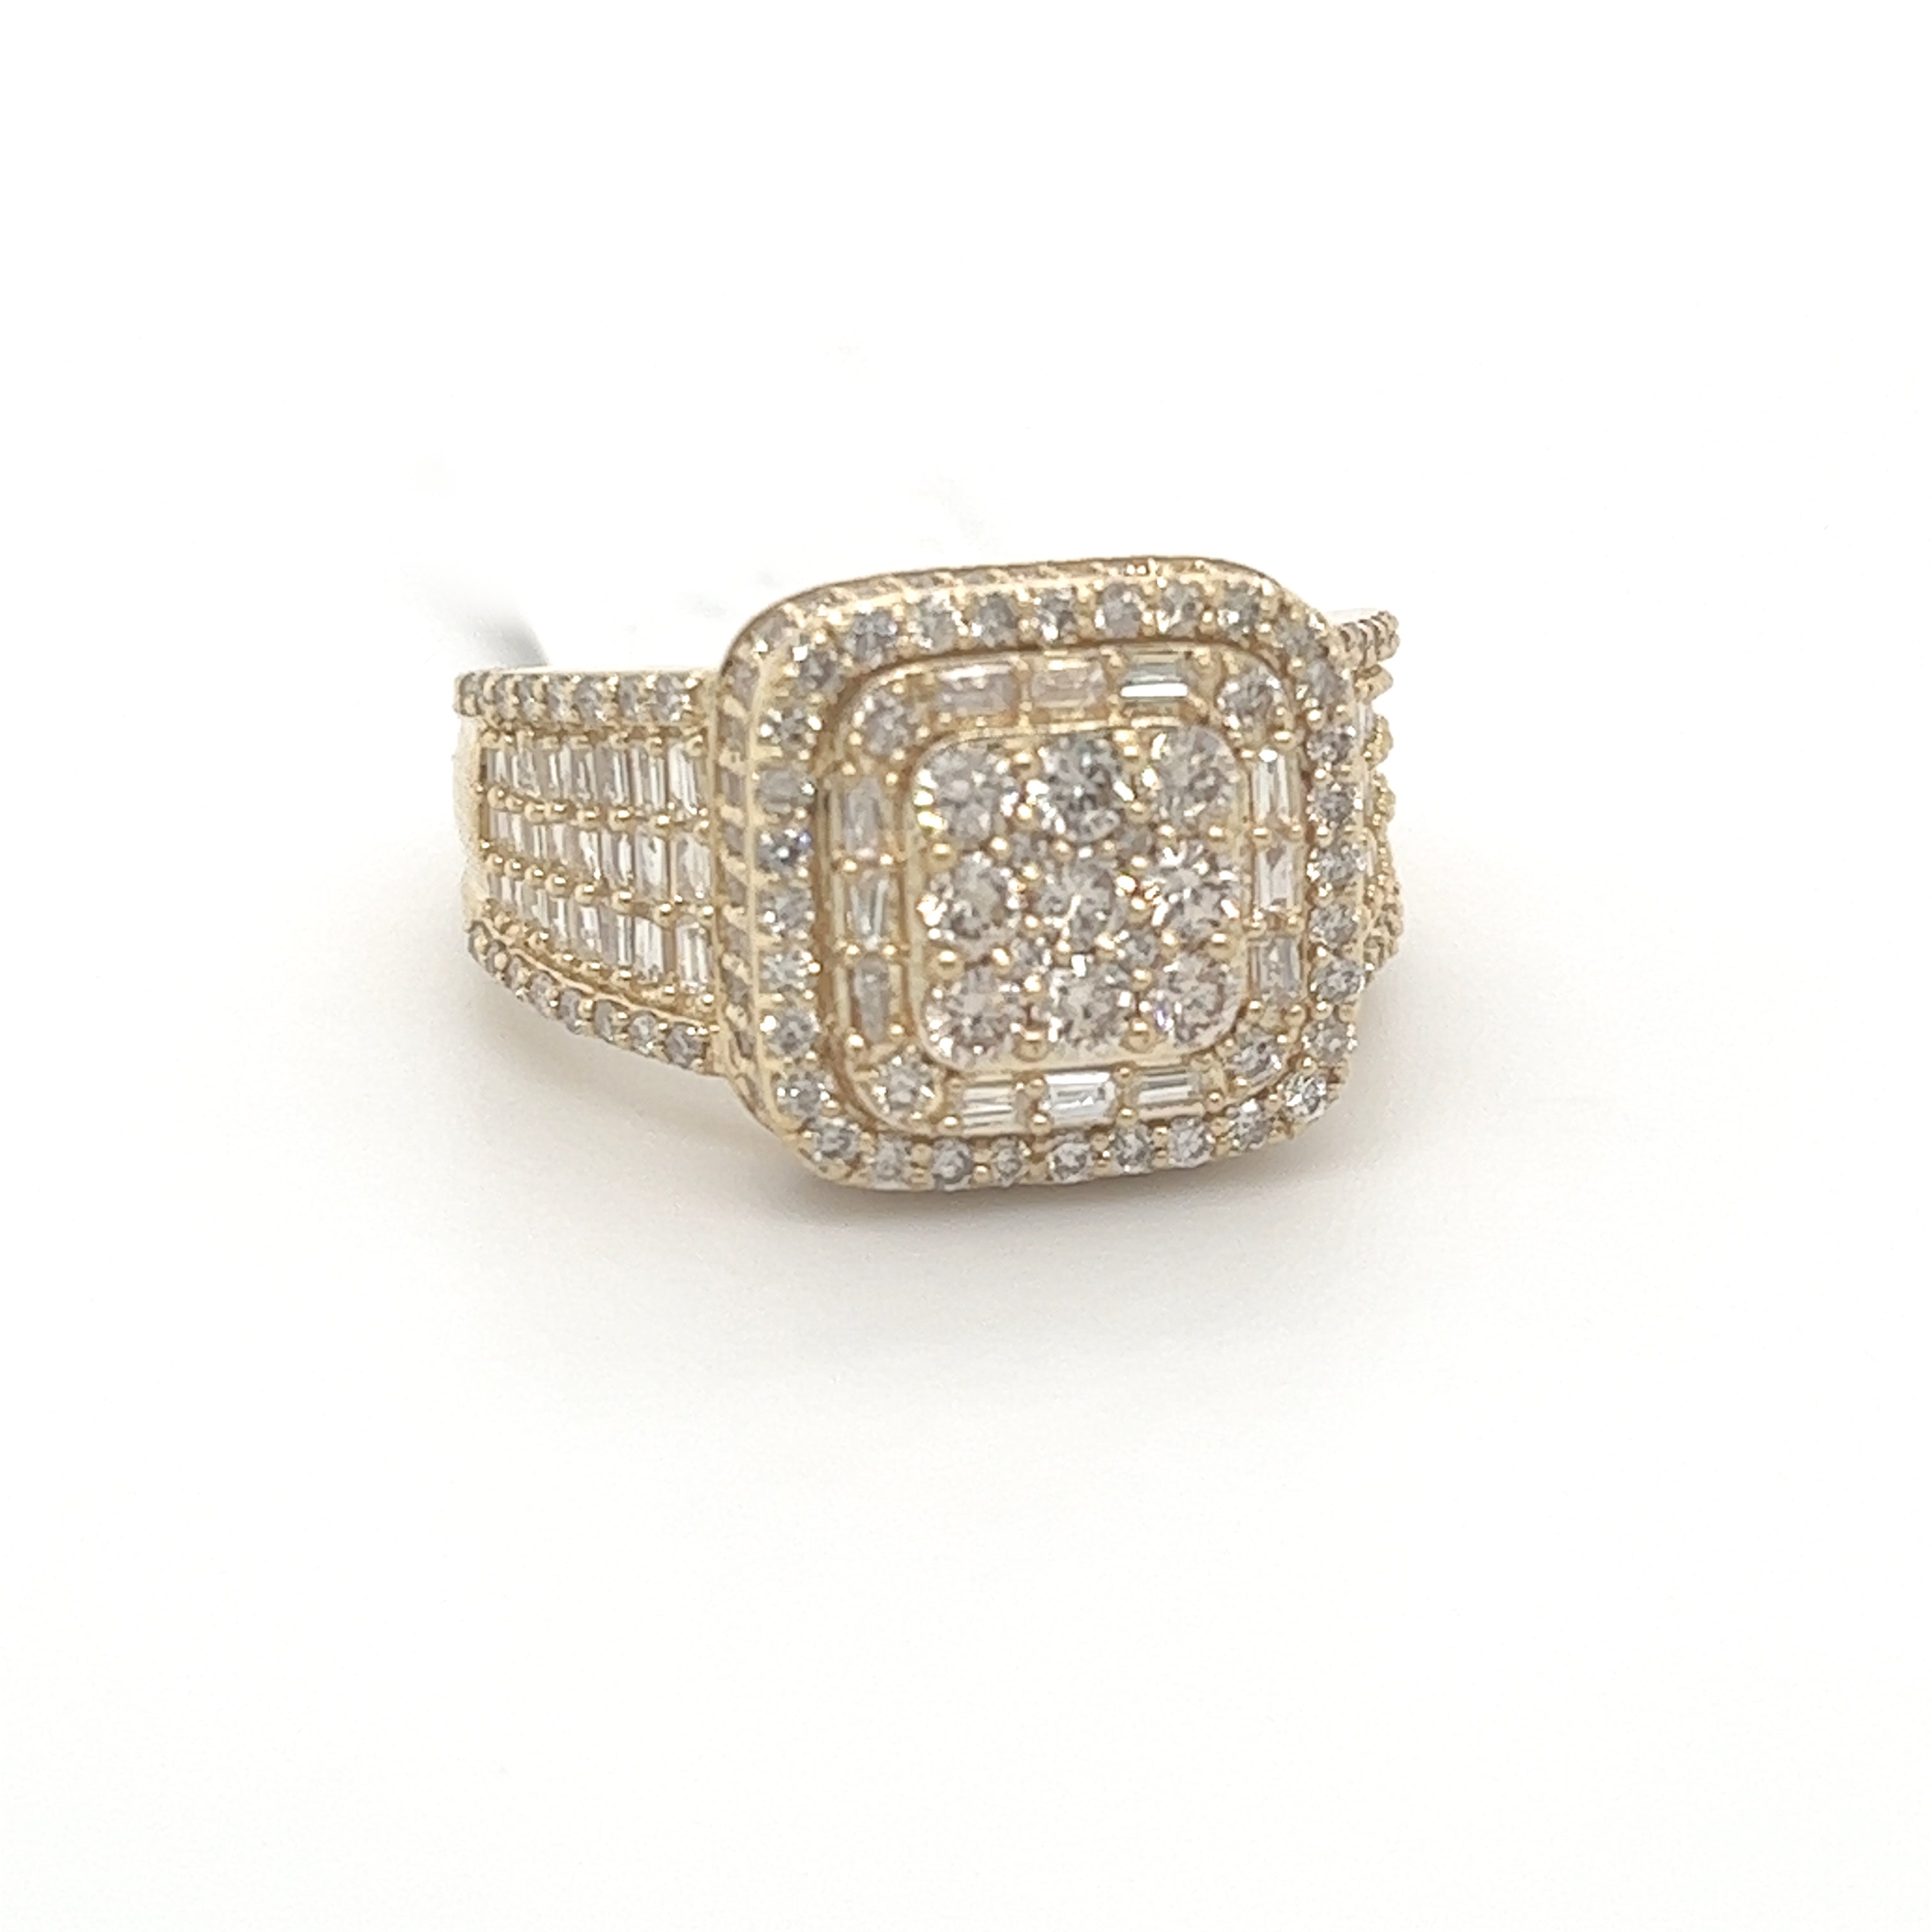 2.04CT. Diamond Ring in 10K Gold - White Carat - USA & Canada